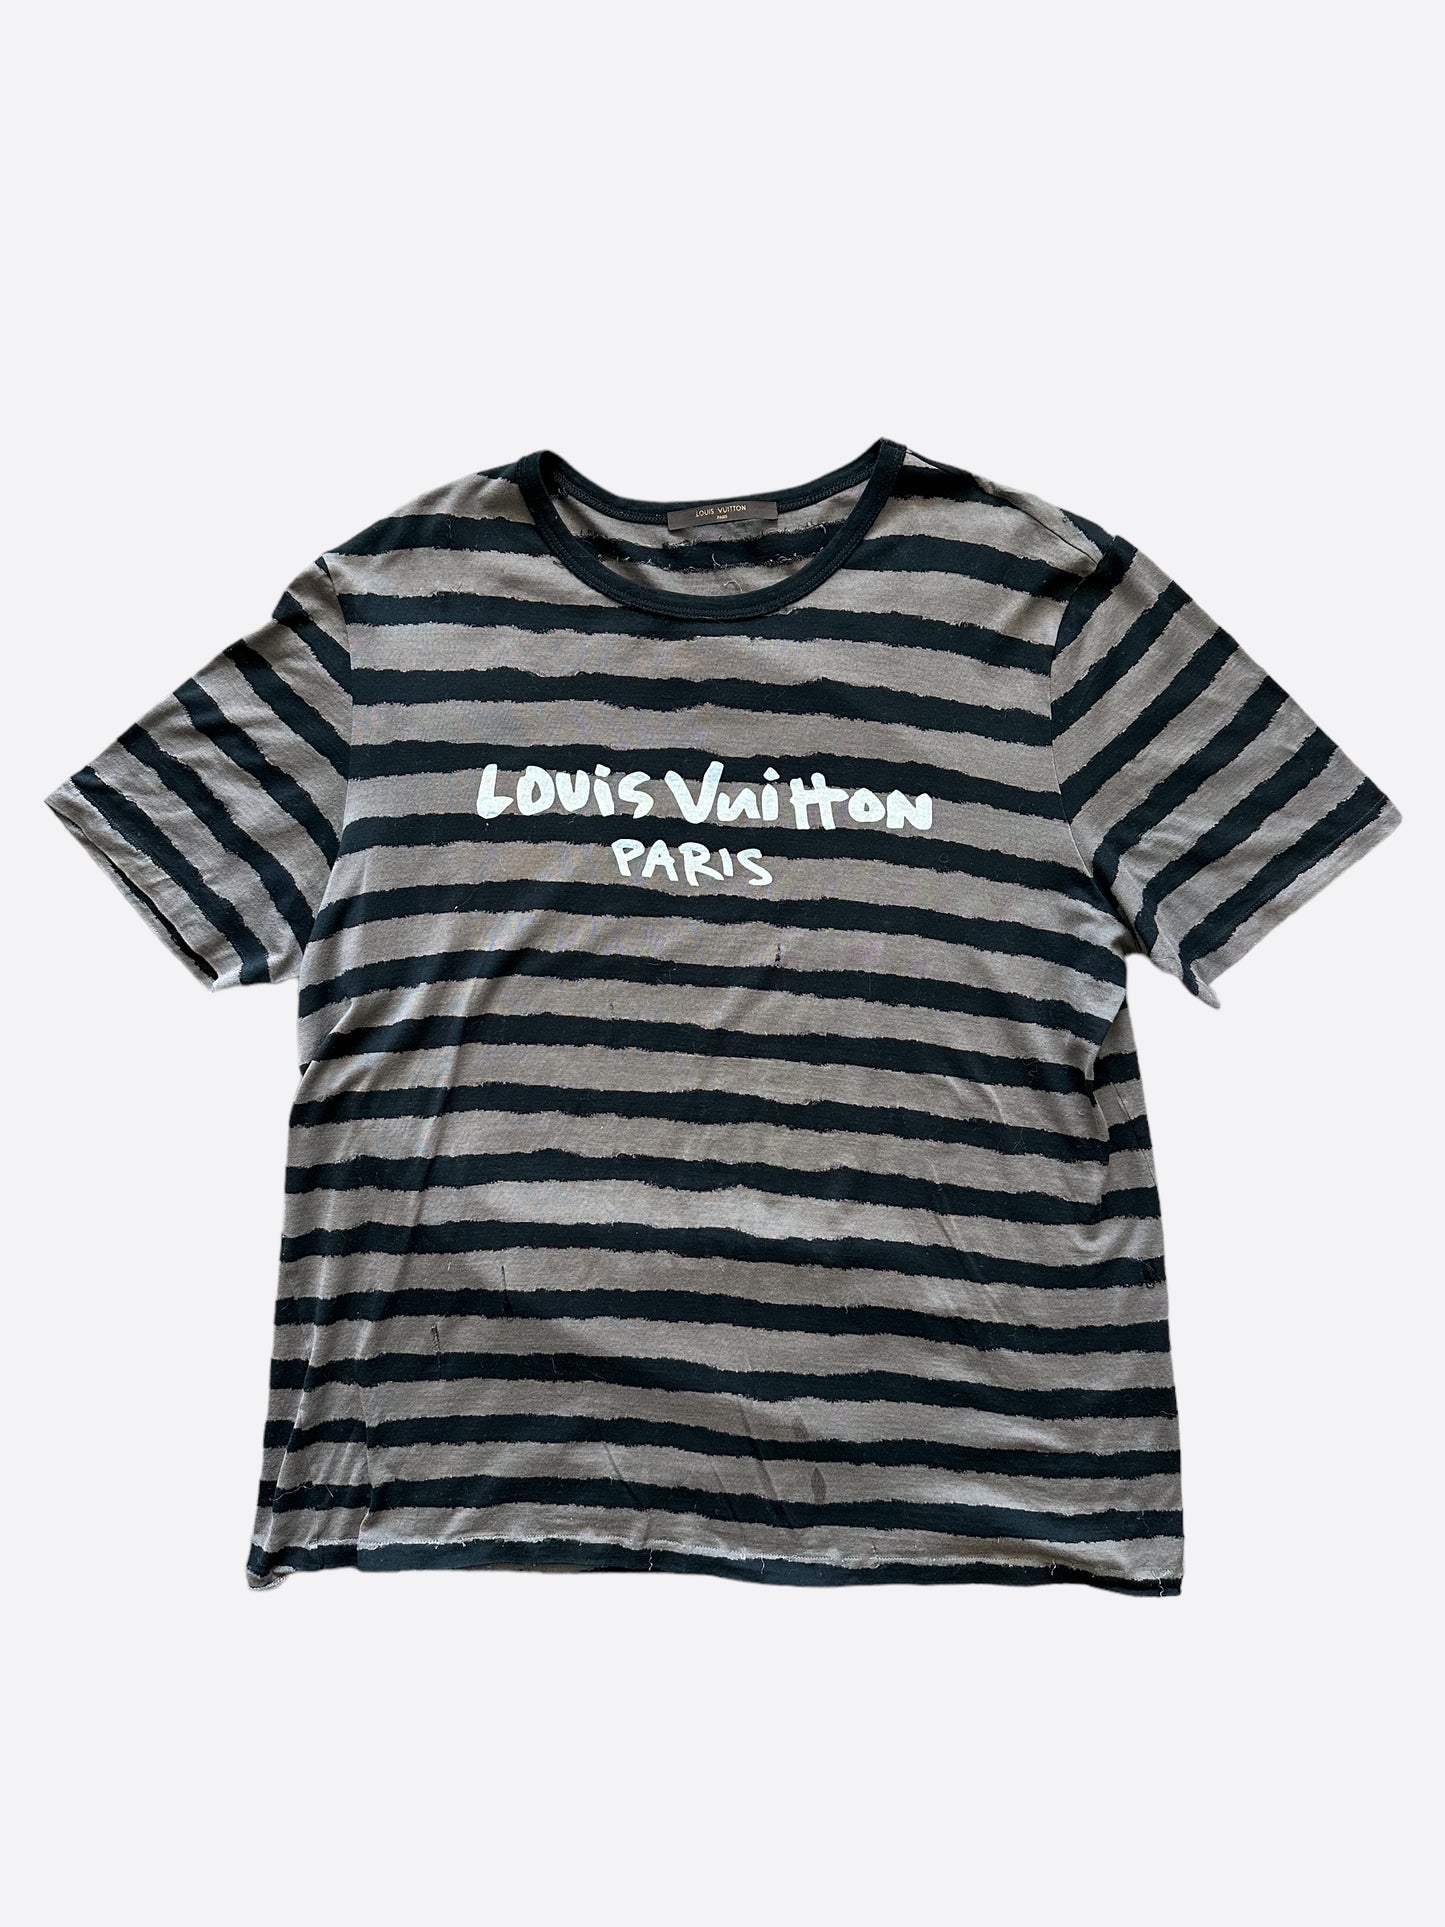 Louis Vuitton Stephen Sprouse Graffiti T-Short